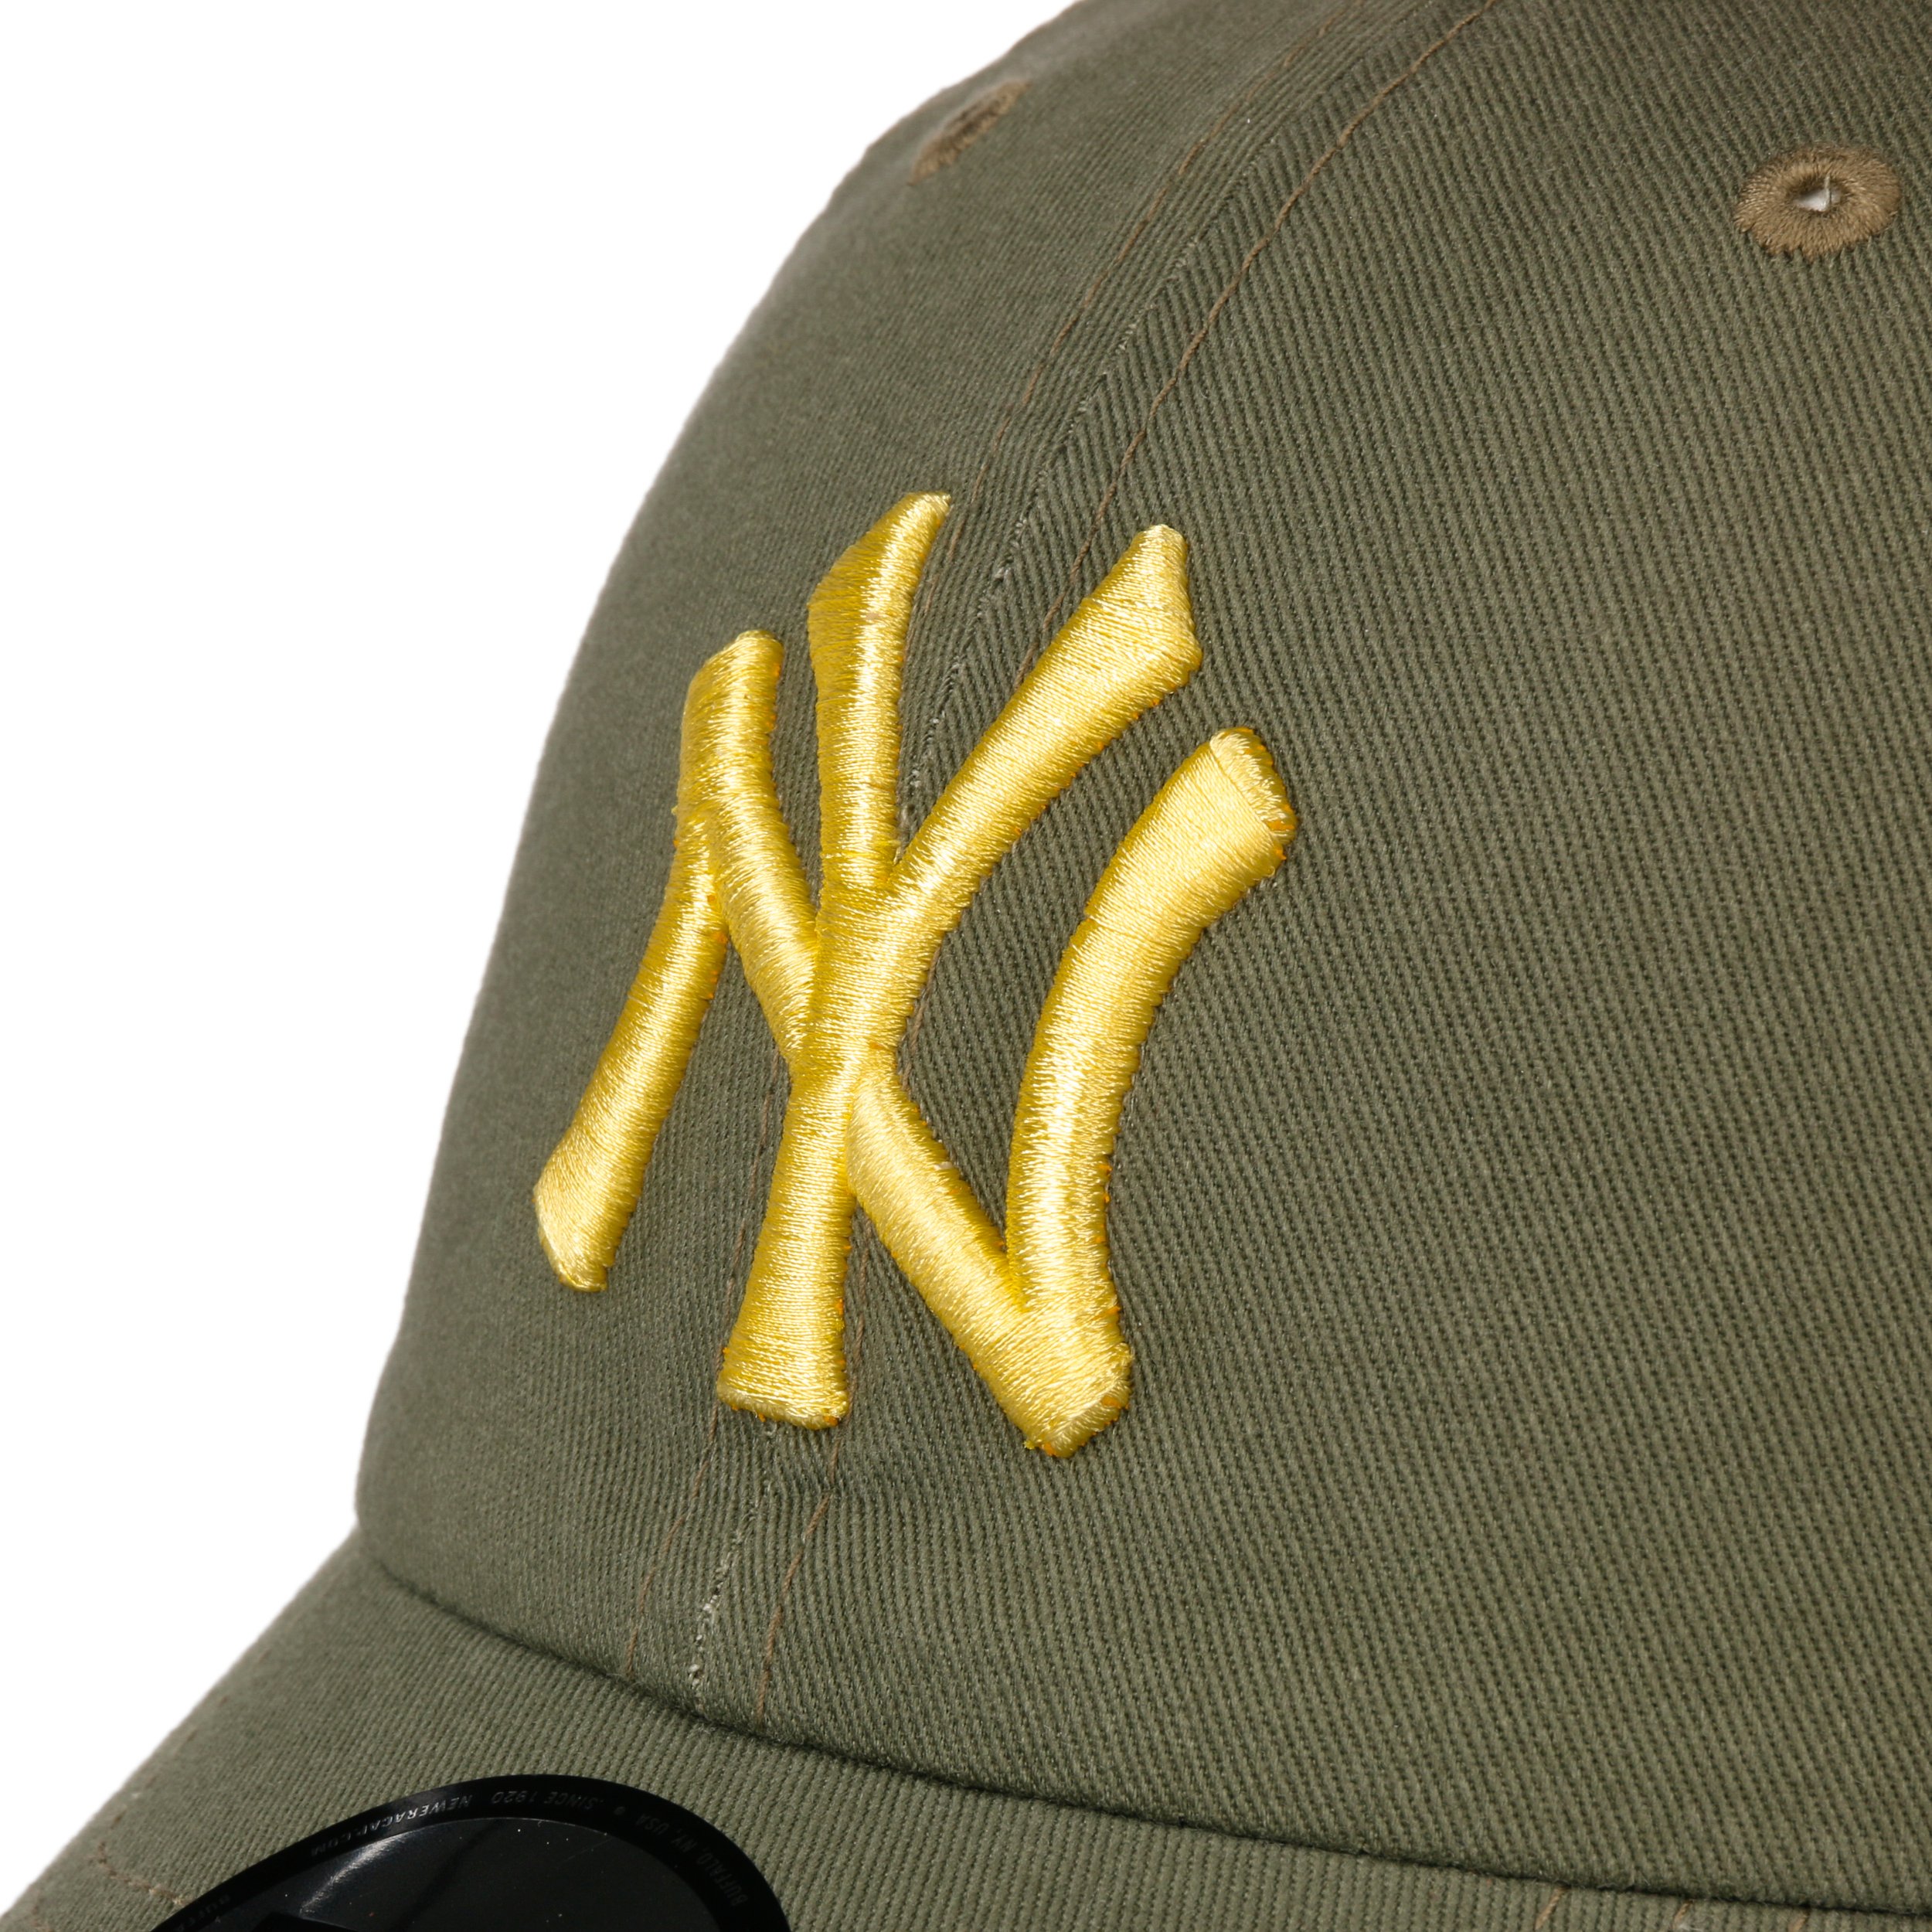 cap New Era 59F League Essential MLB New York Yankees - Toffee/White -  men´s 